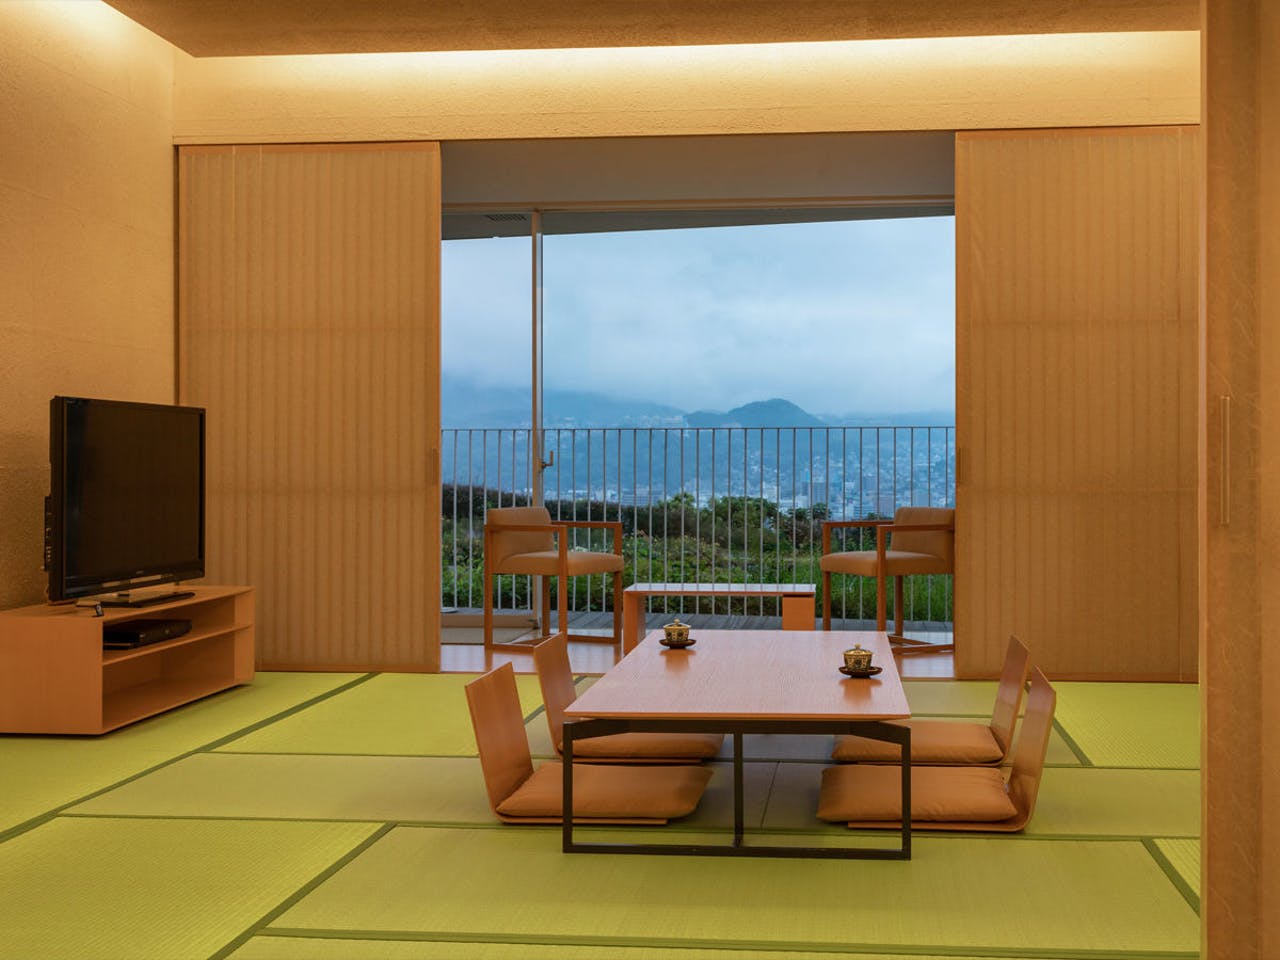 Japanese Suite ห้องแบบญี่ปุ่น เสื่อทาทามิ